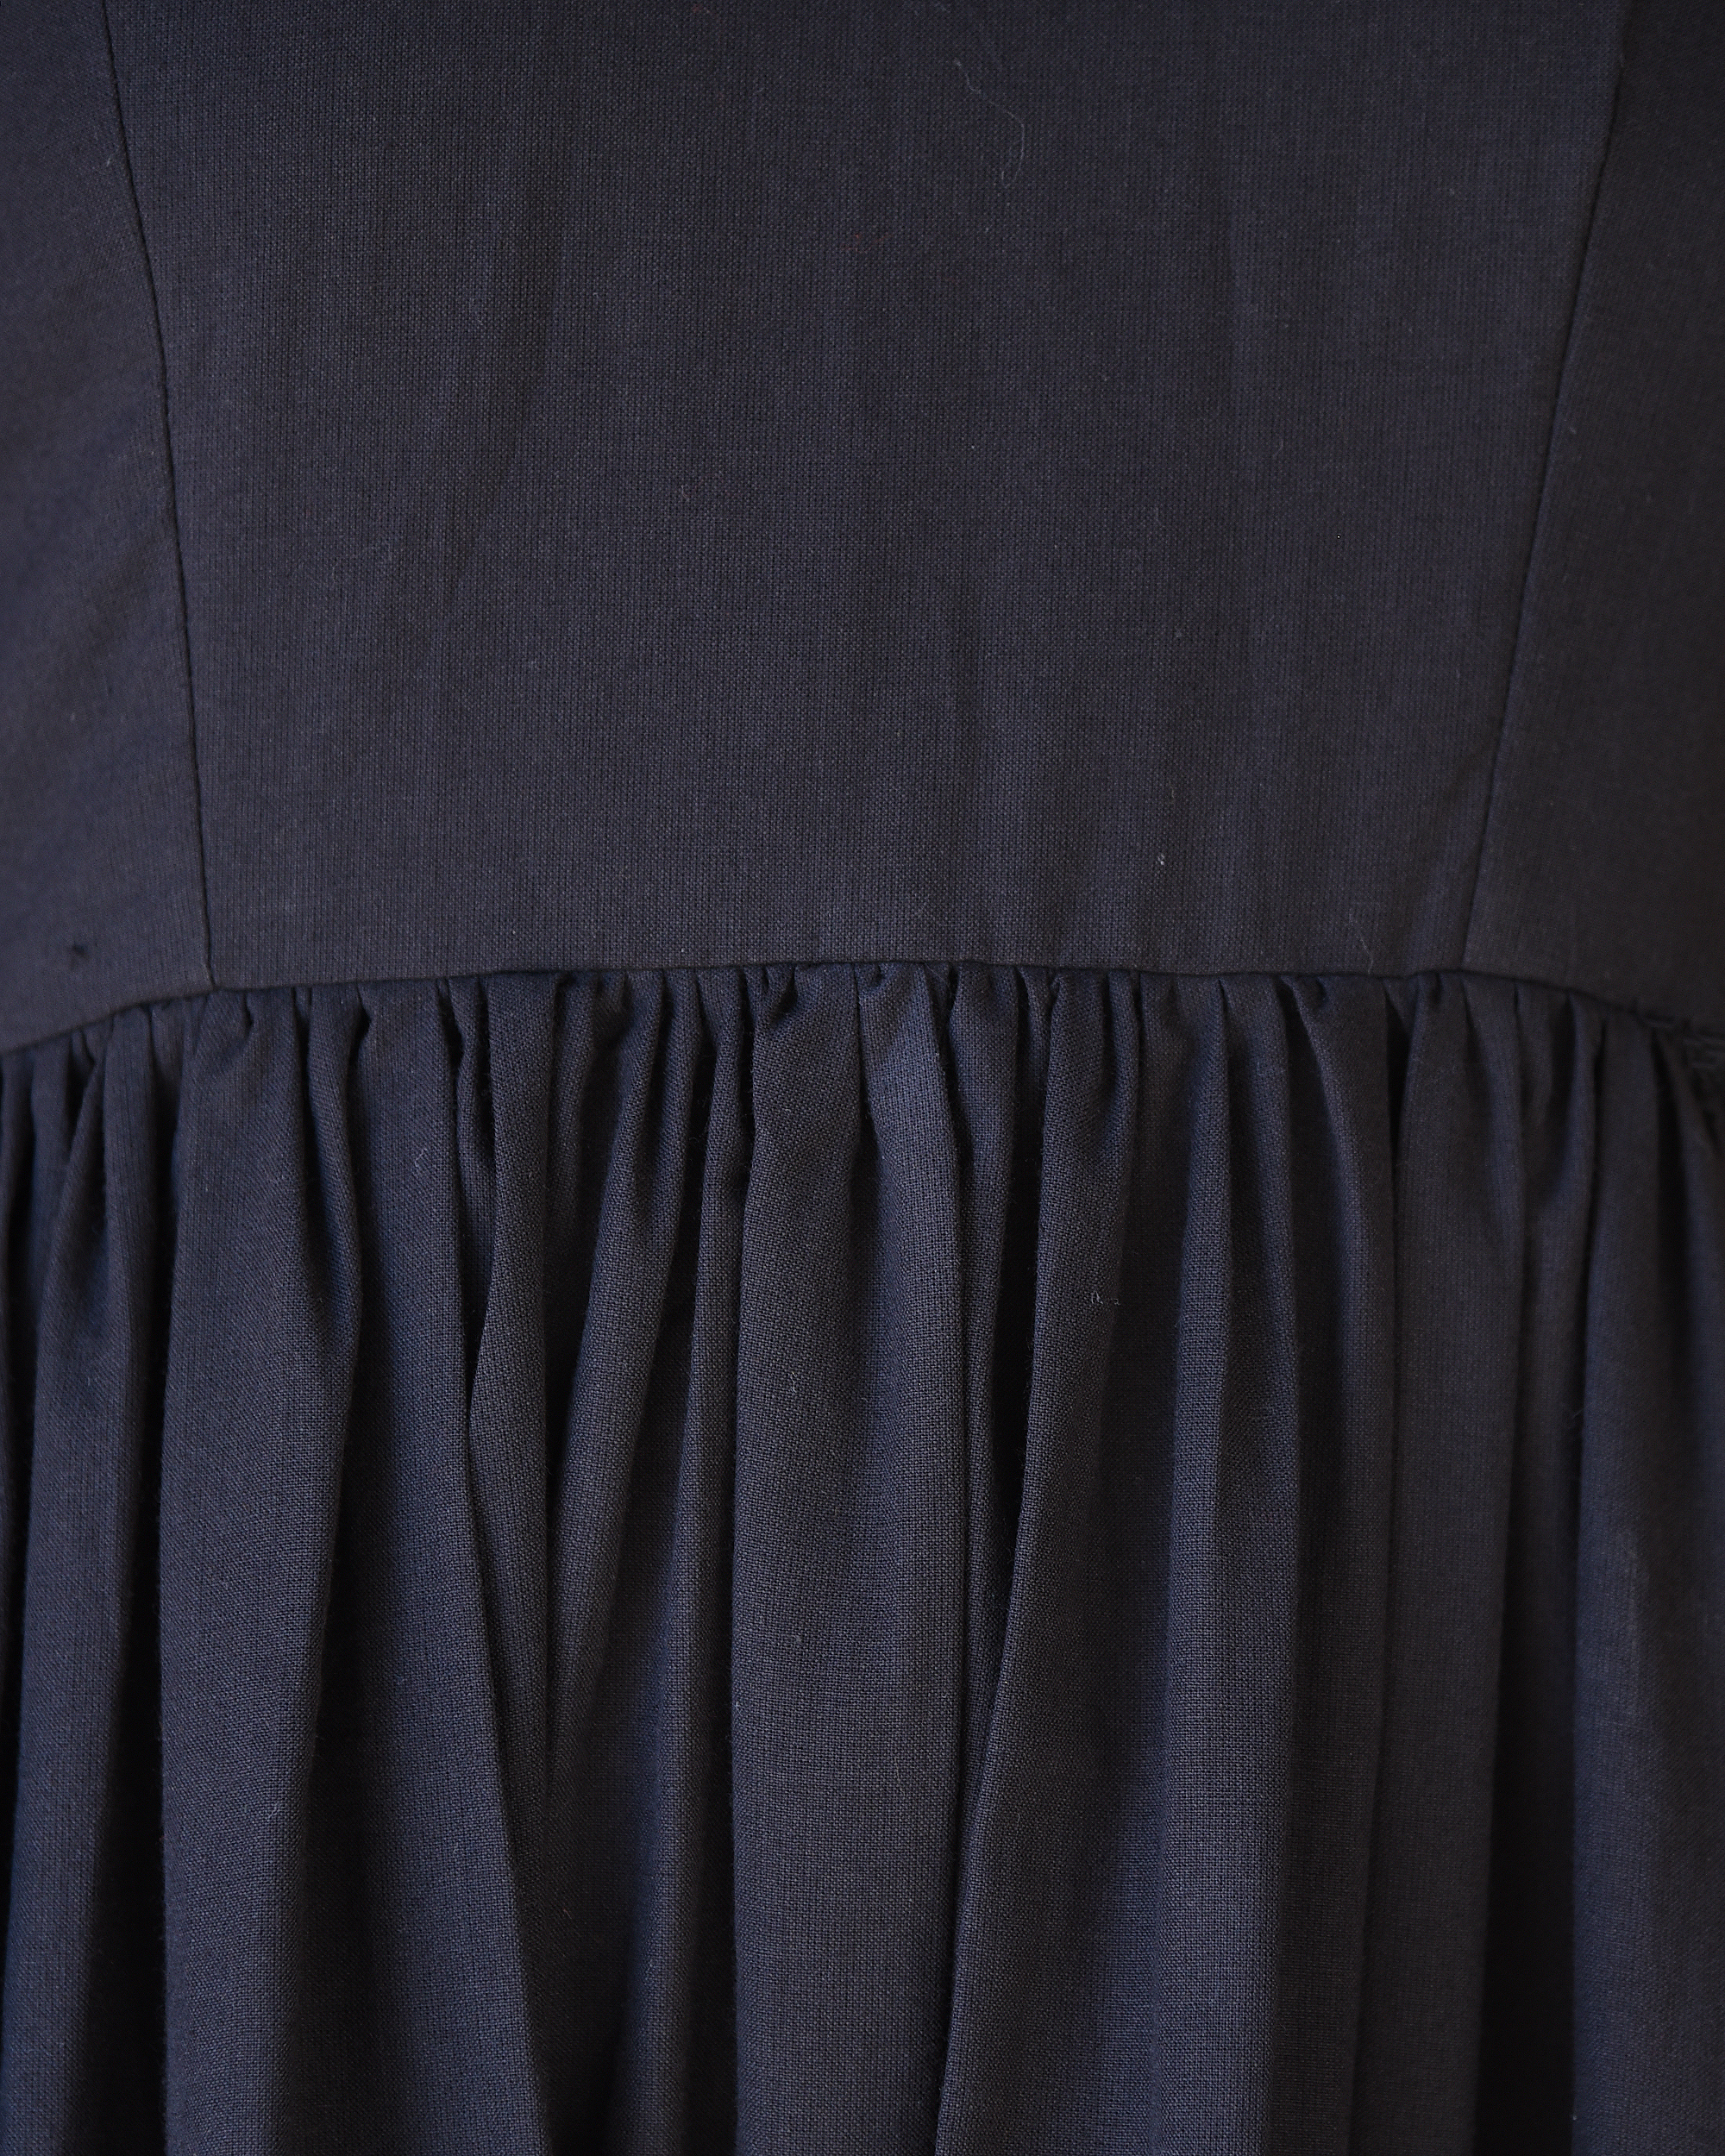 Black gathered dress with kalamkari border by Desi Doree | The Secret Label